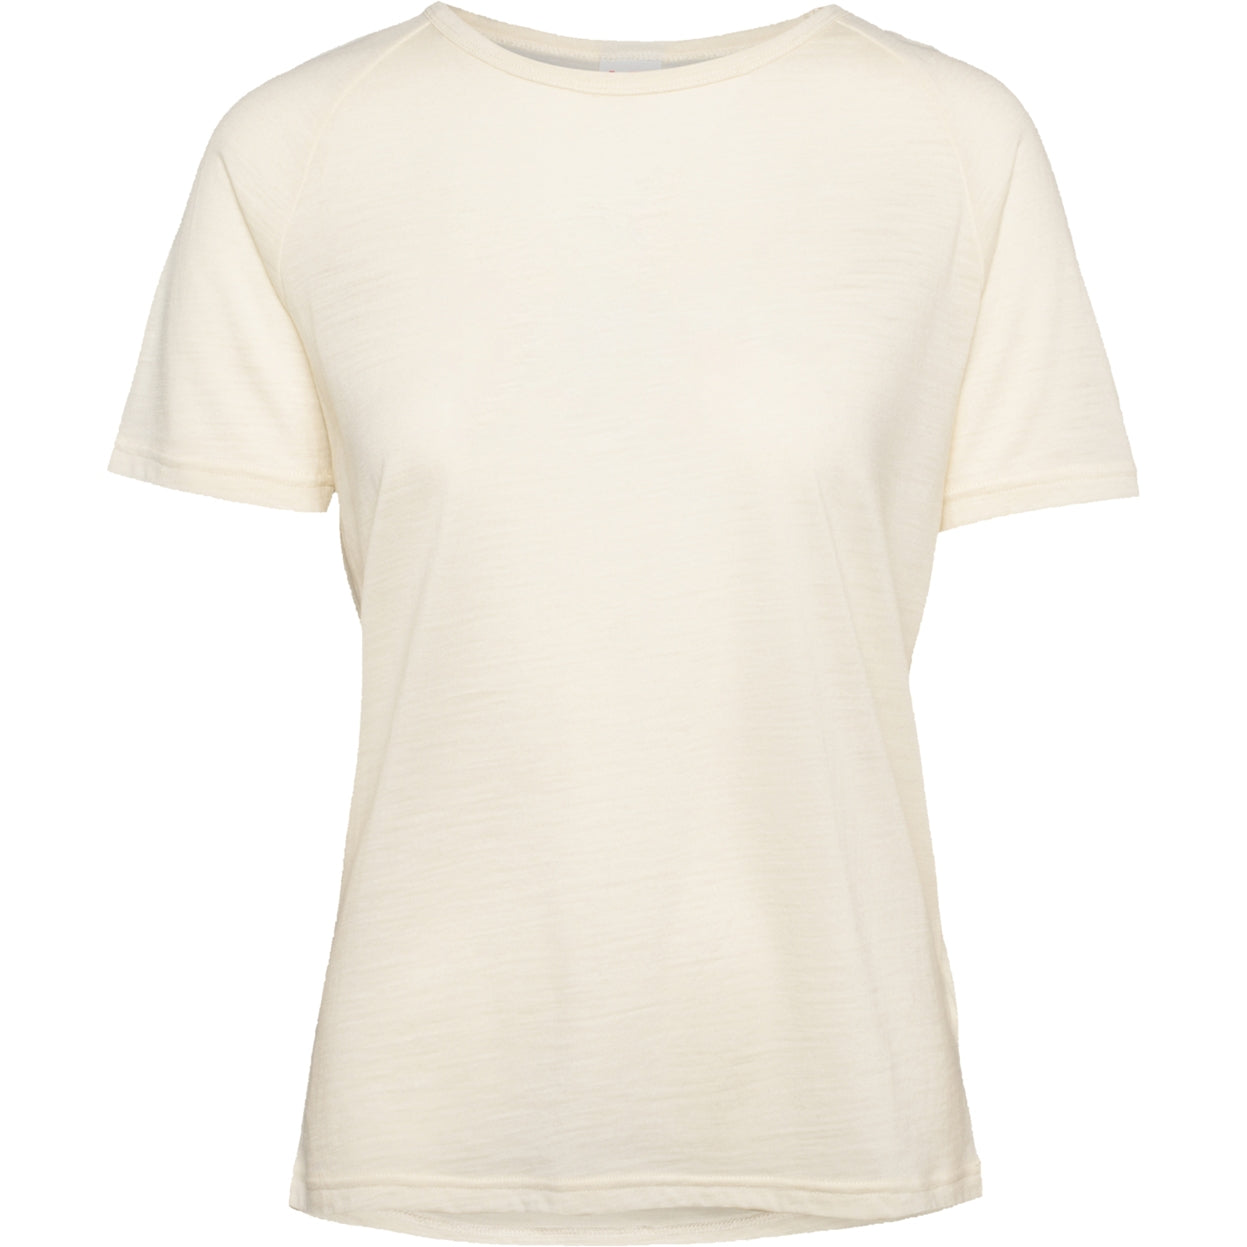 kari-traa-sanne-wool-t-shirt-women-light-beige-1-1583937.jpg